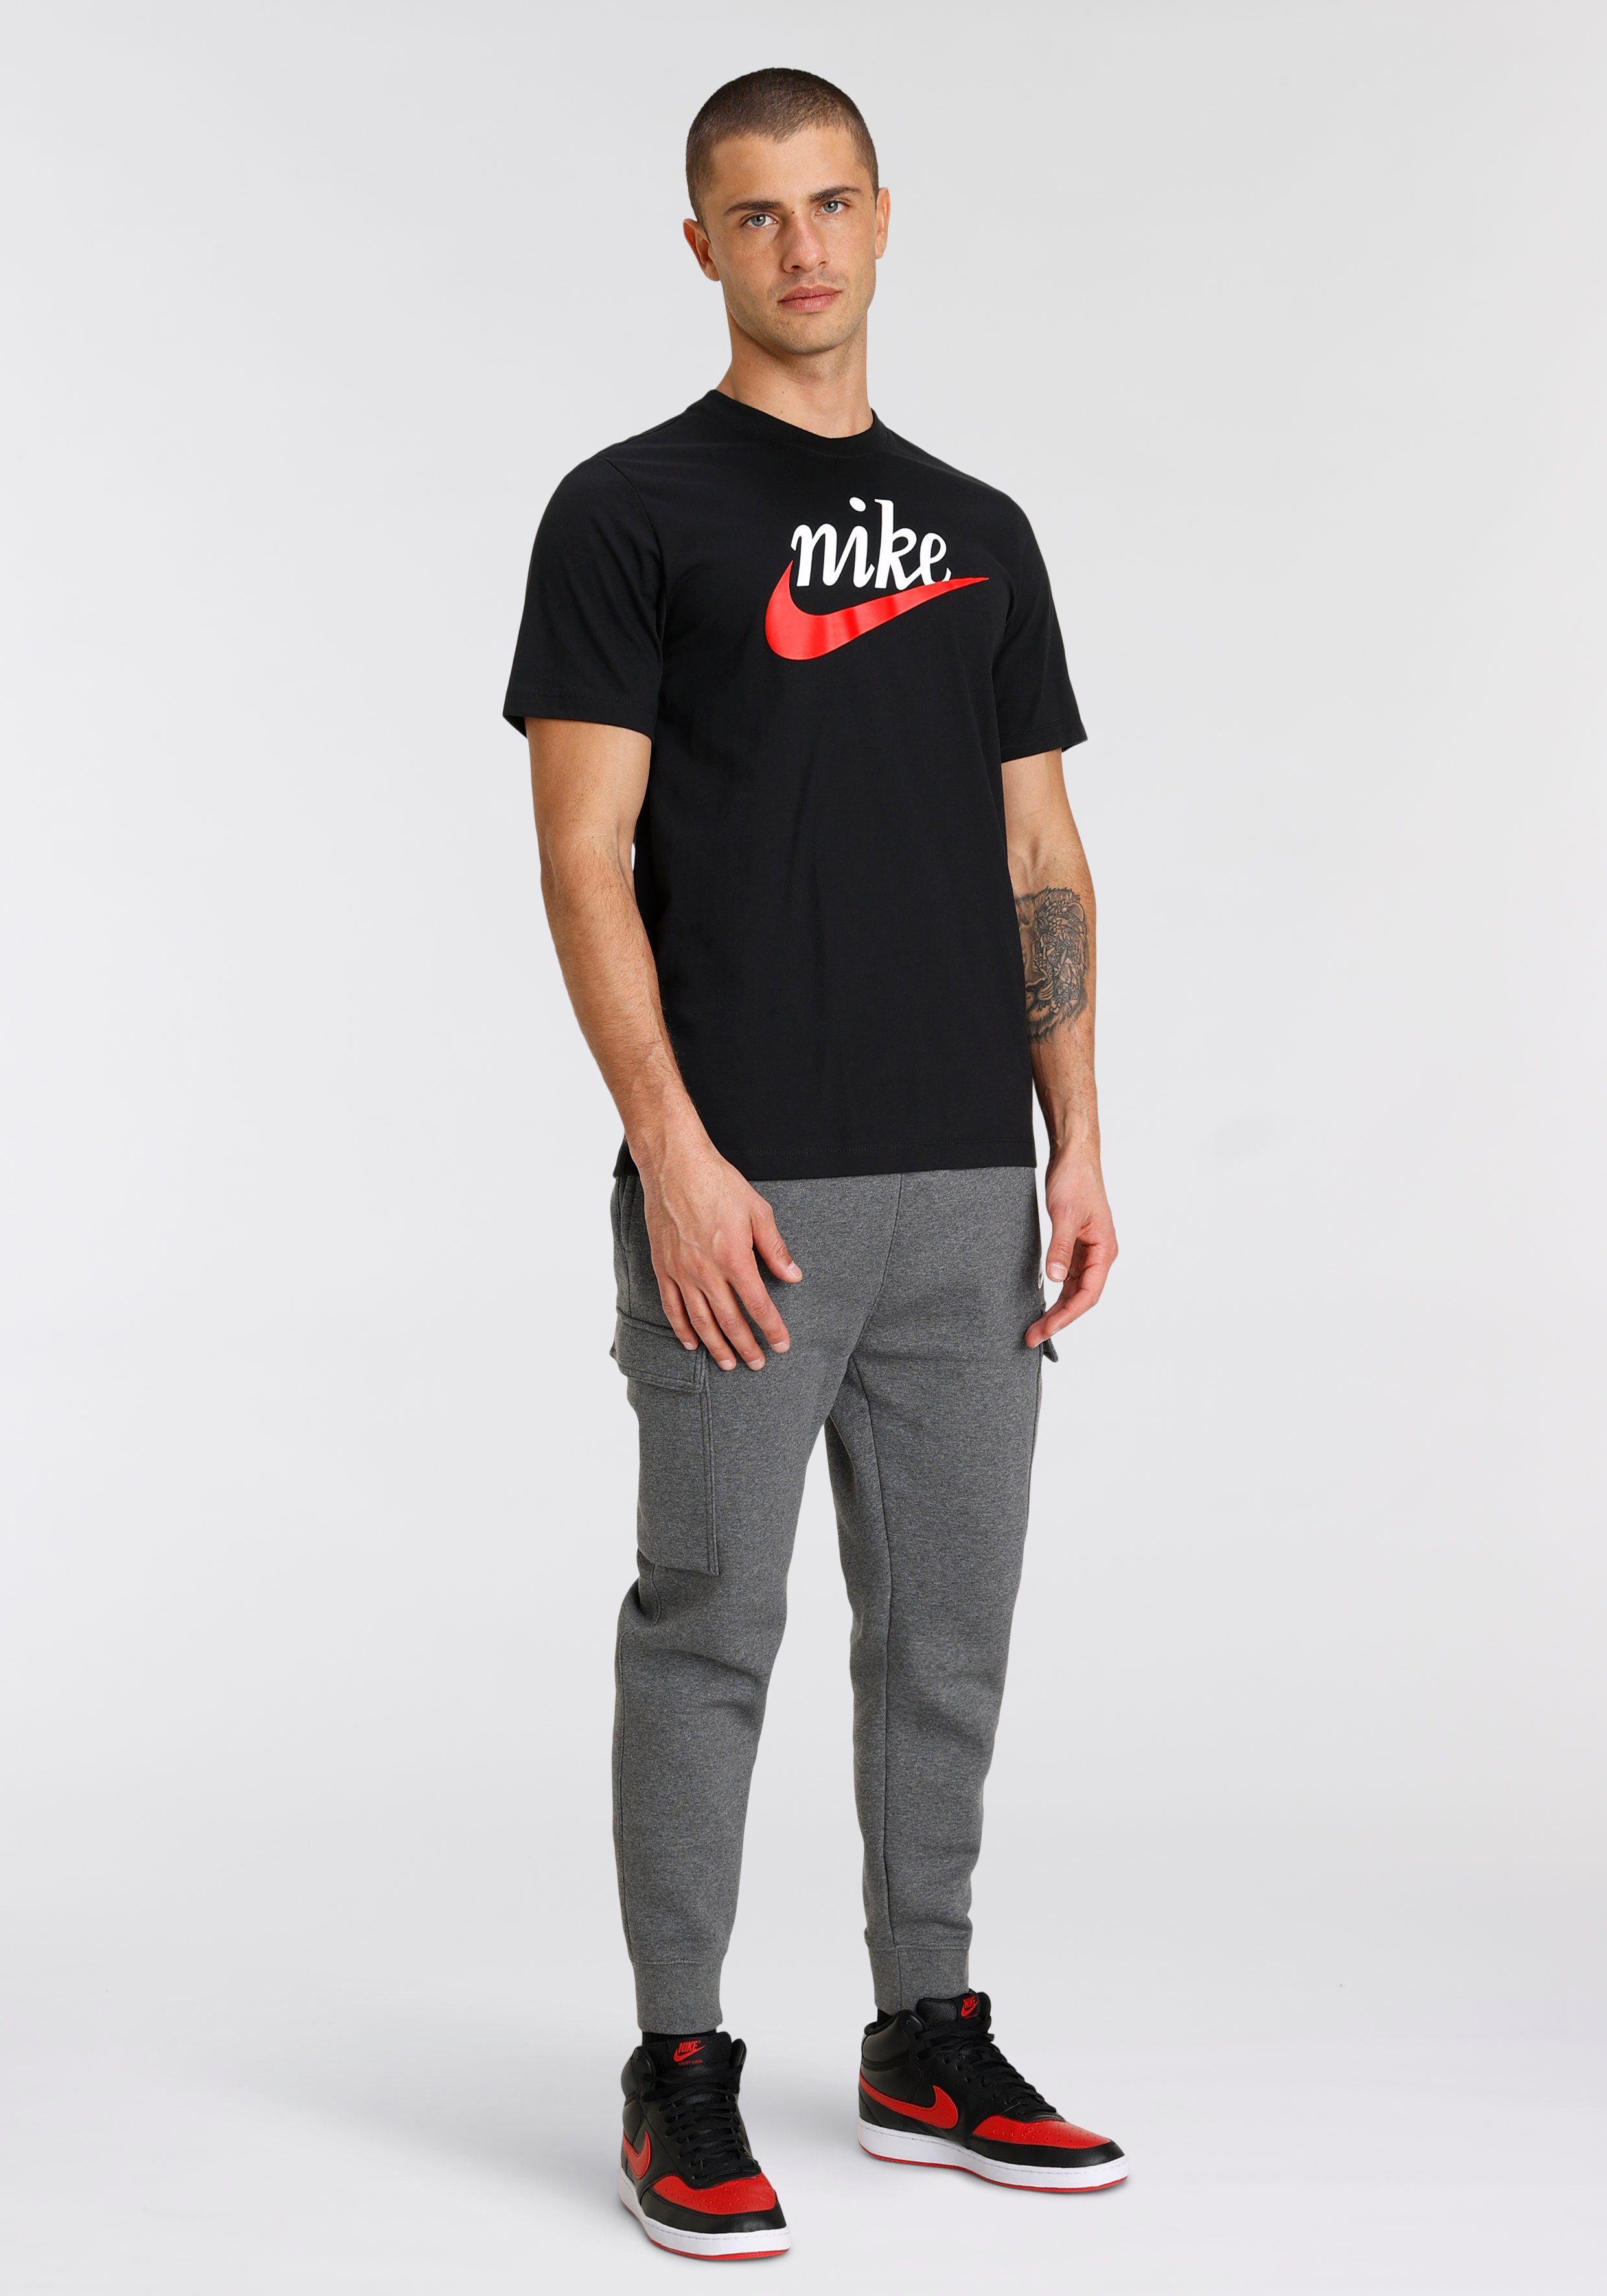 Nike Sportswear BLACK T-Shirt Men's T-Shirt